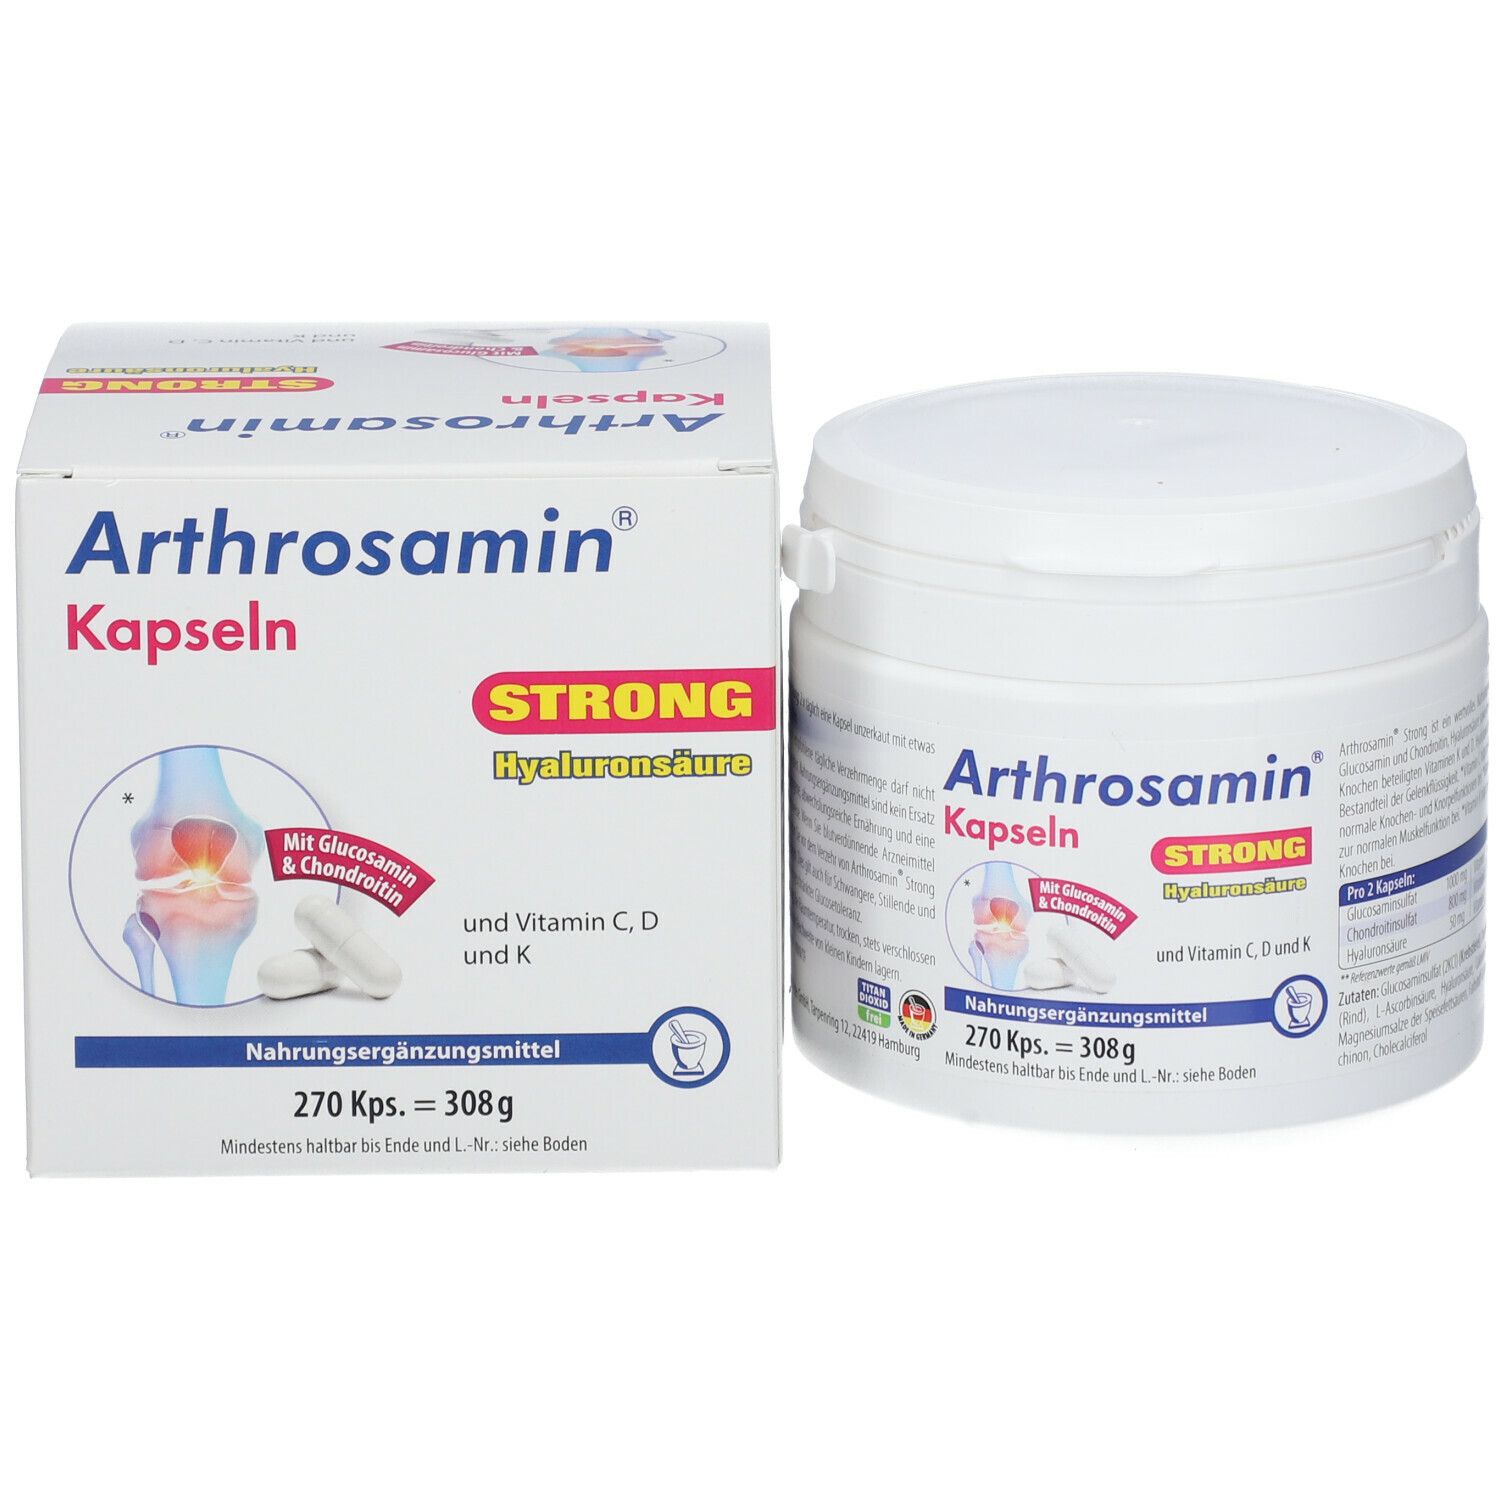 Arthrosamin® Strong Gelenkkapseln